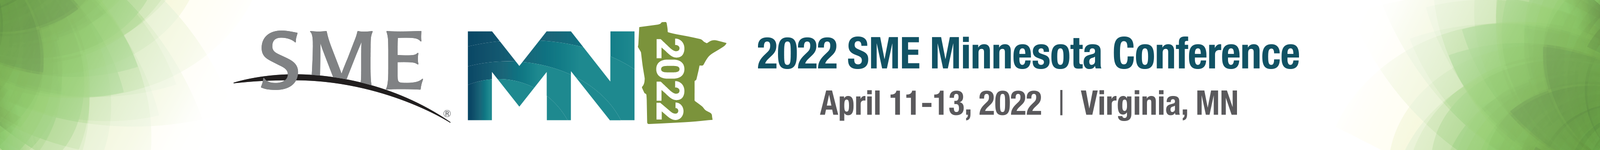 2022 SME Minnesota Conference logo